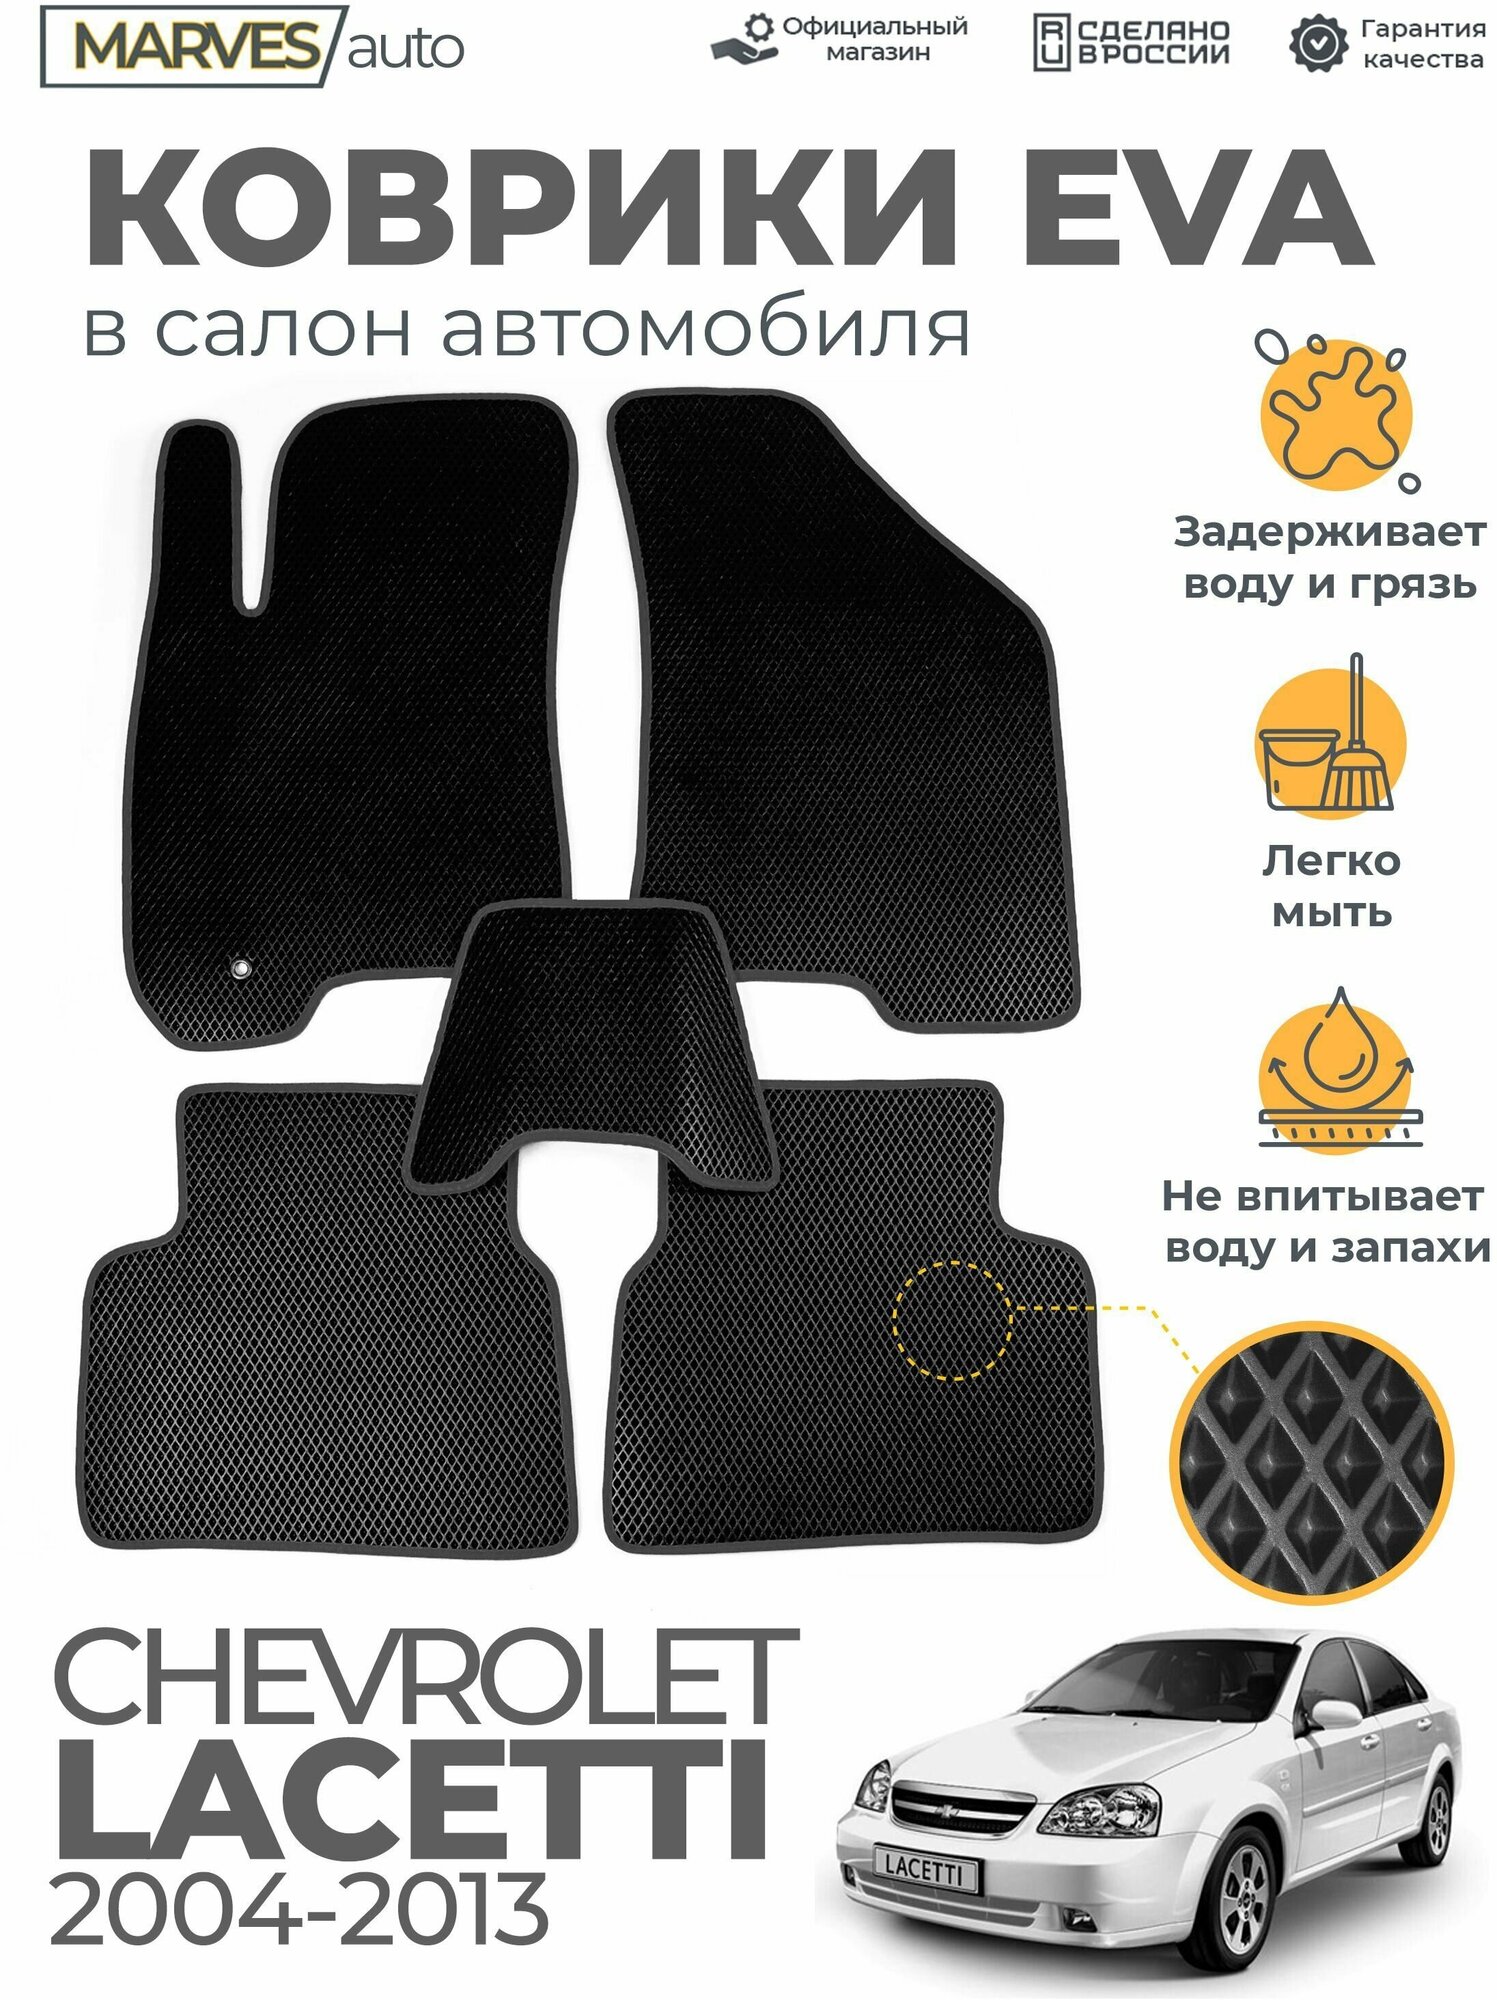 Коврики EVA (ЭВА, ЕВА) в салон автомобиля Chevrolet Lacetti (2004-2013), комплект 5 шт, черный ромб/темно-серый кант